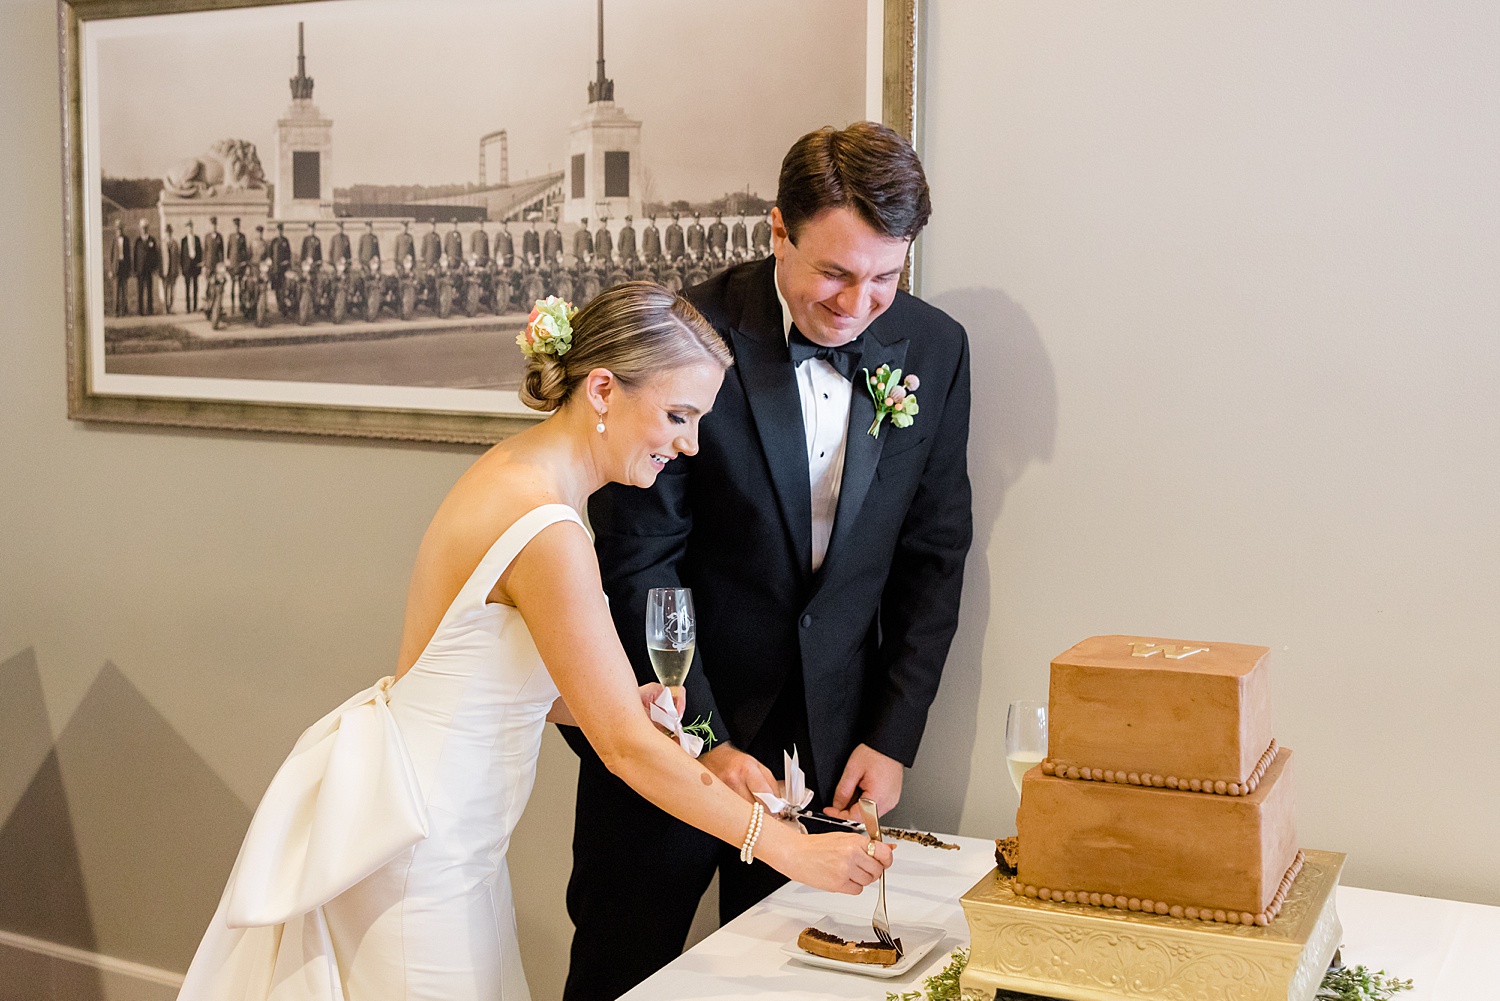 couple cut cake at wedding reception